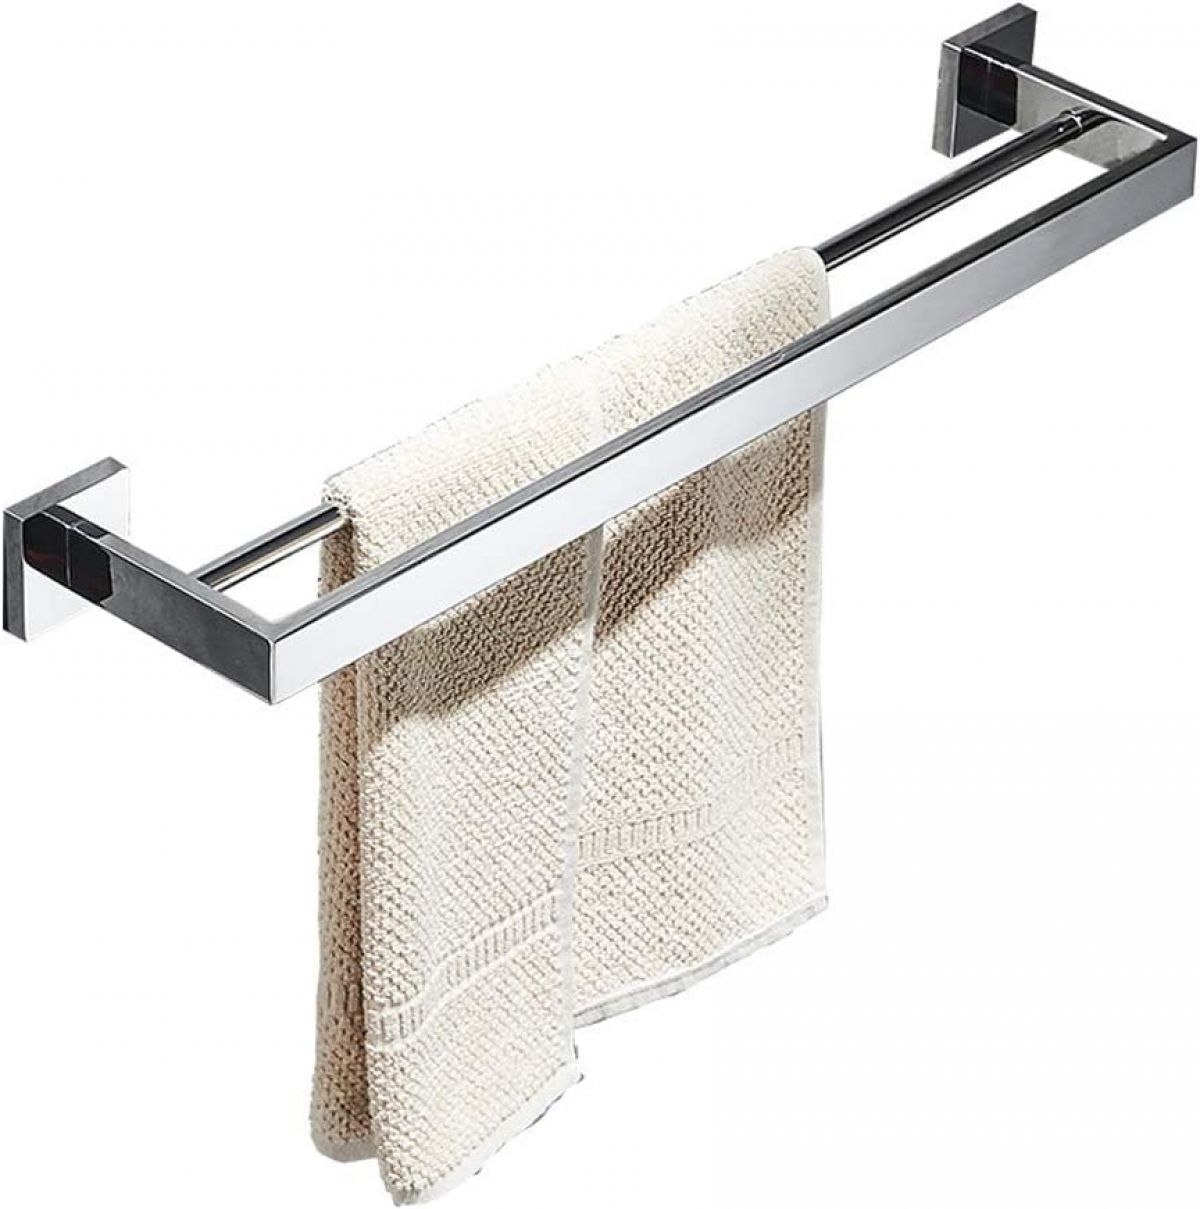 Wall-mounted double towel rail 60 cm